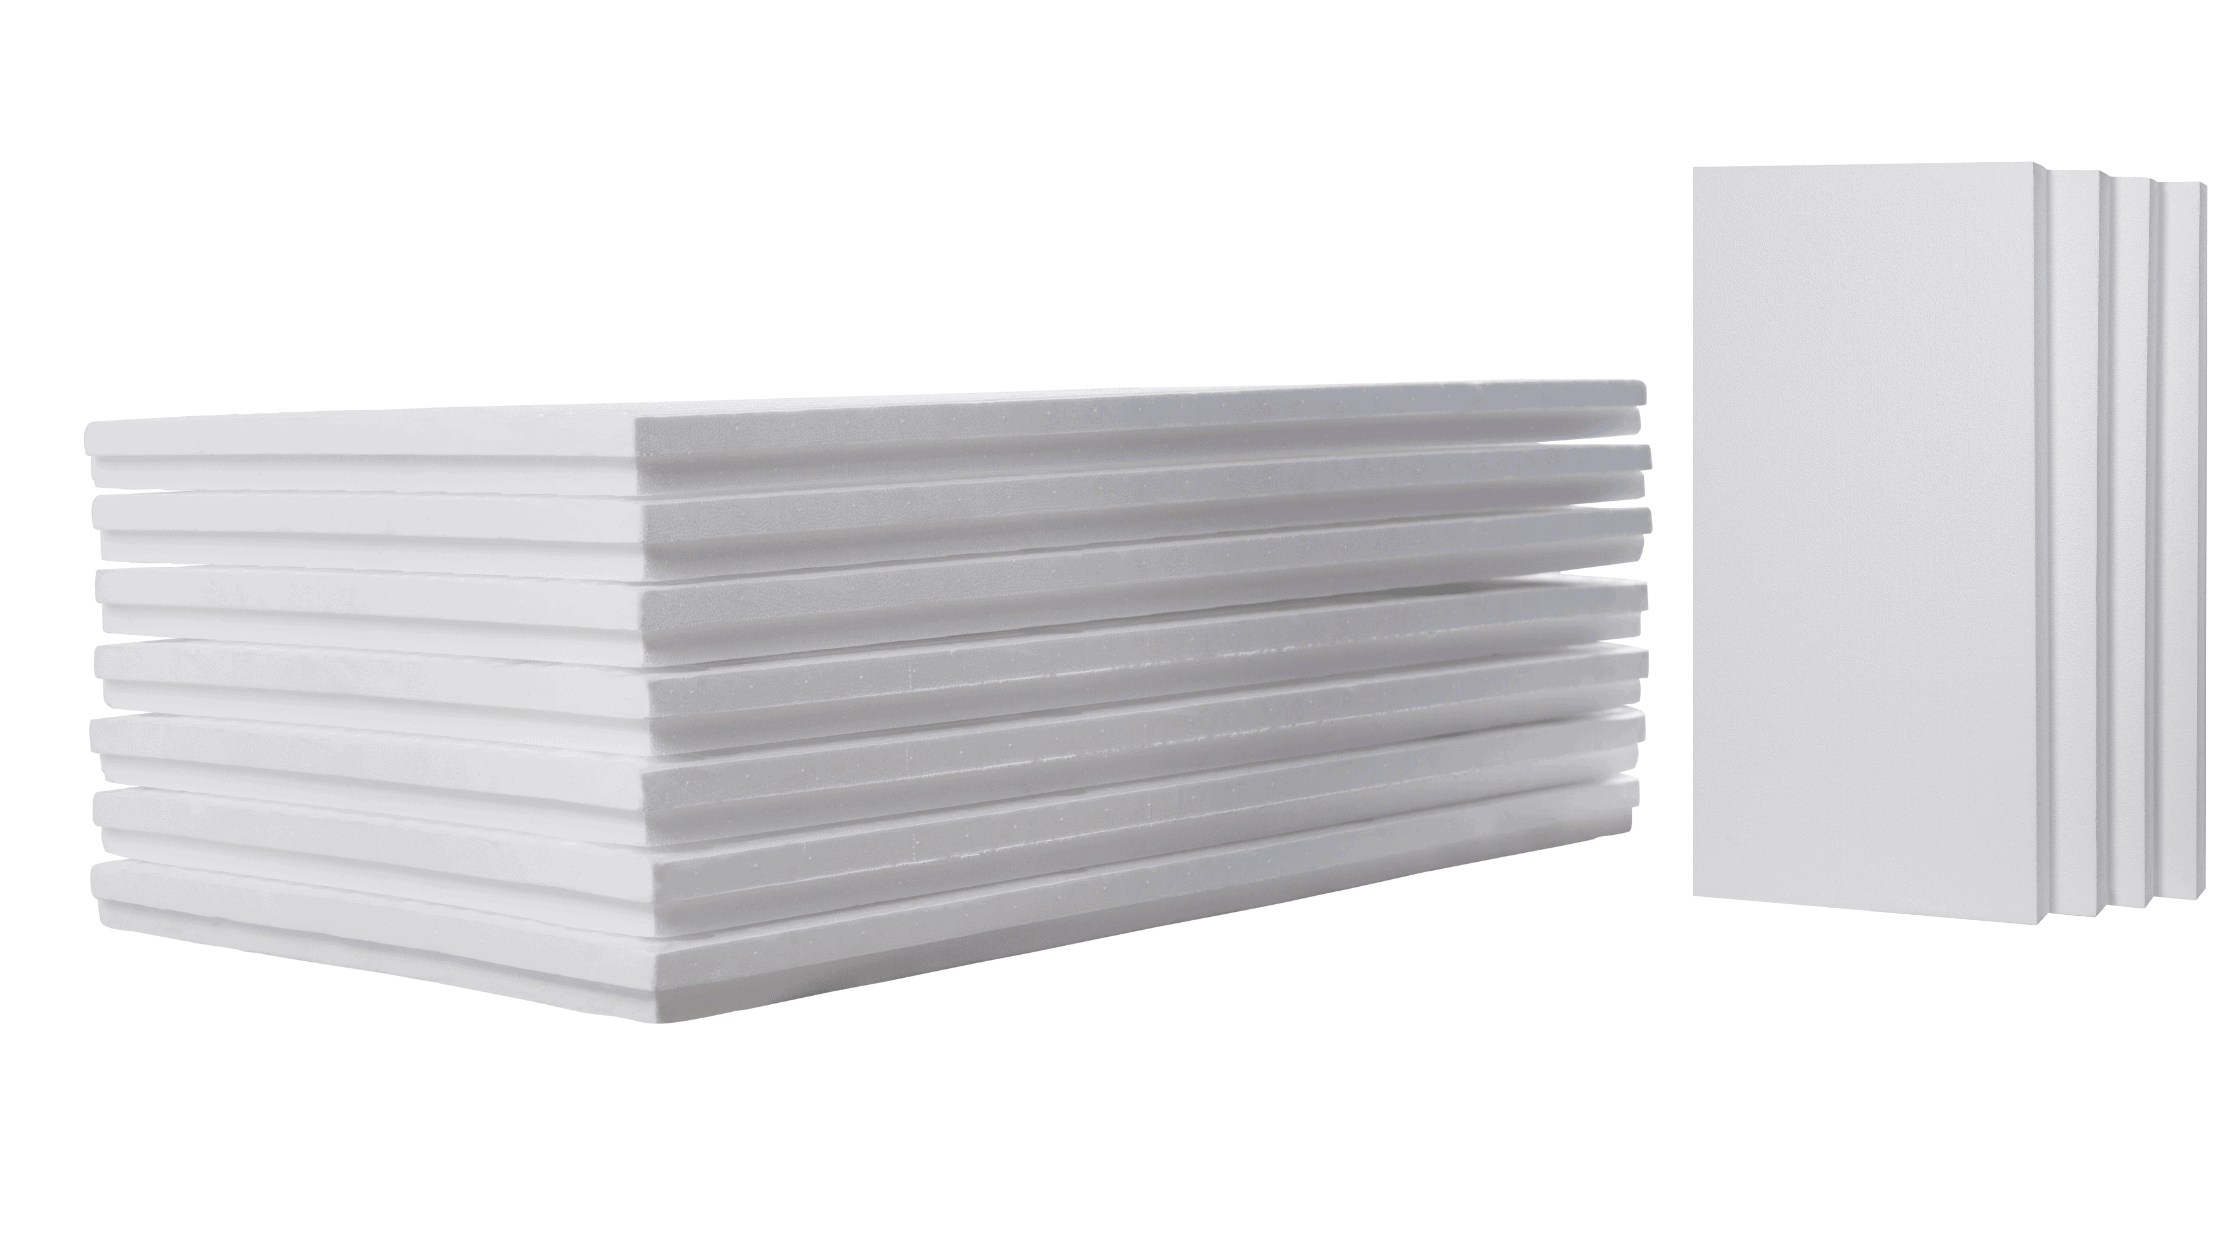 Is Styrofoam A Good Insulator For Sound & Heat?